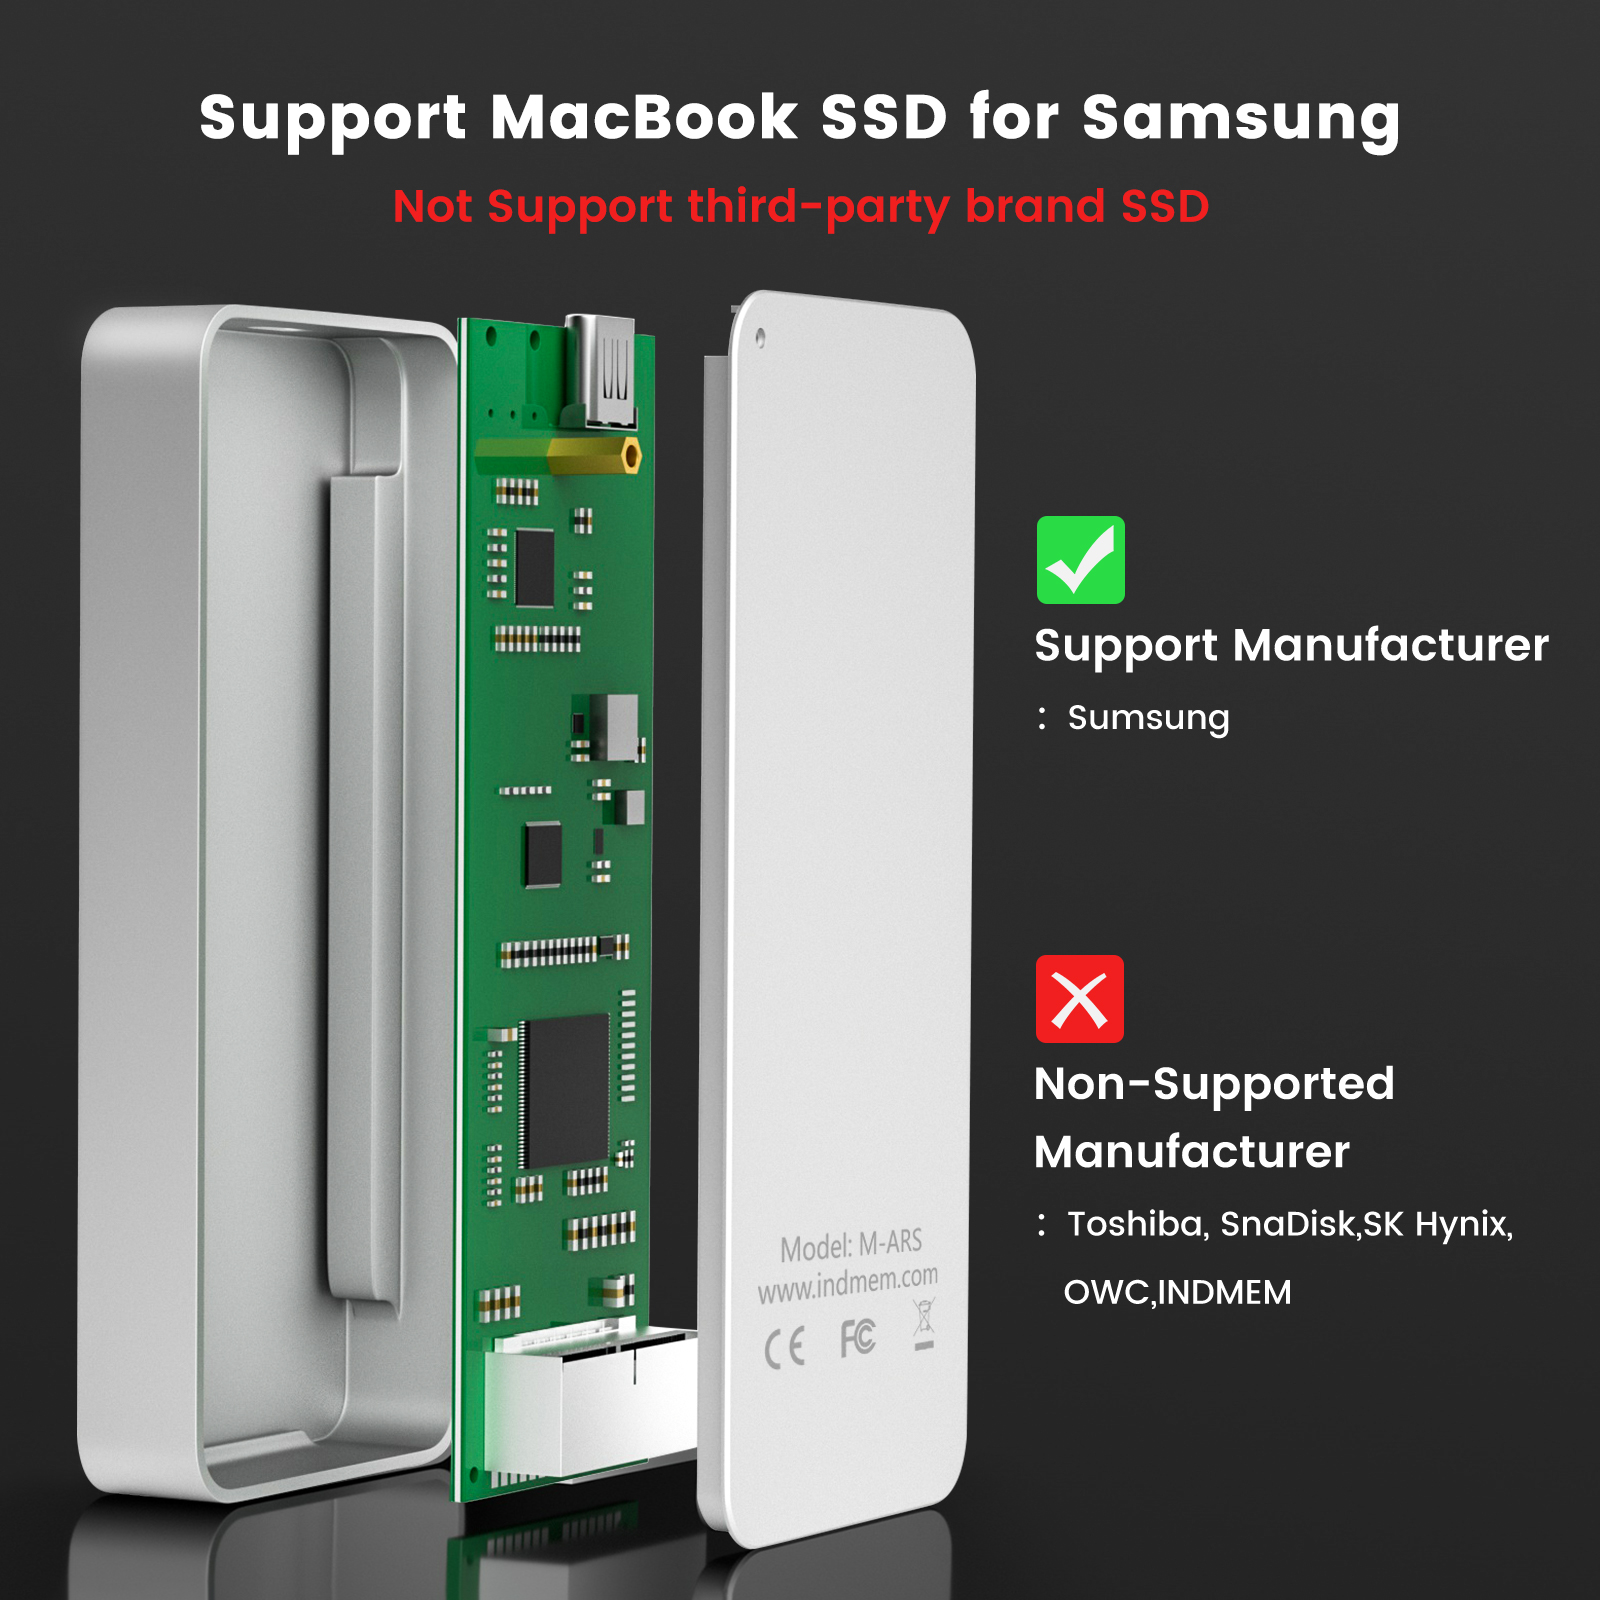 USB C 3.2 Enclosure for 12+16 PIN MacBook SSDs